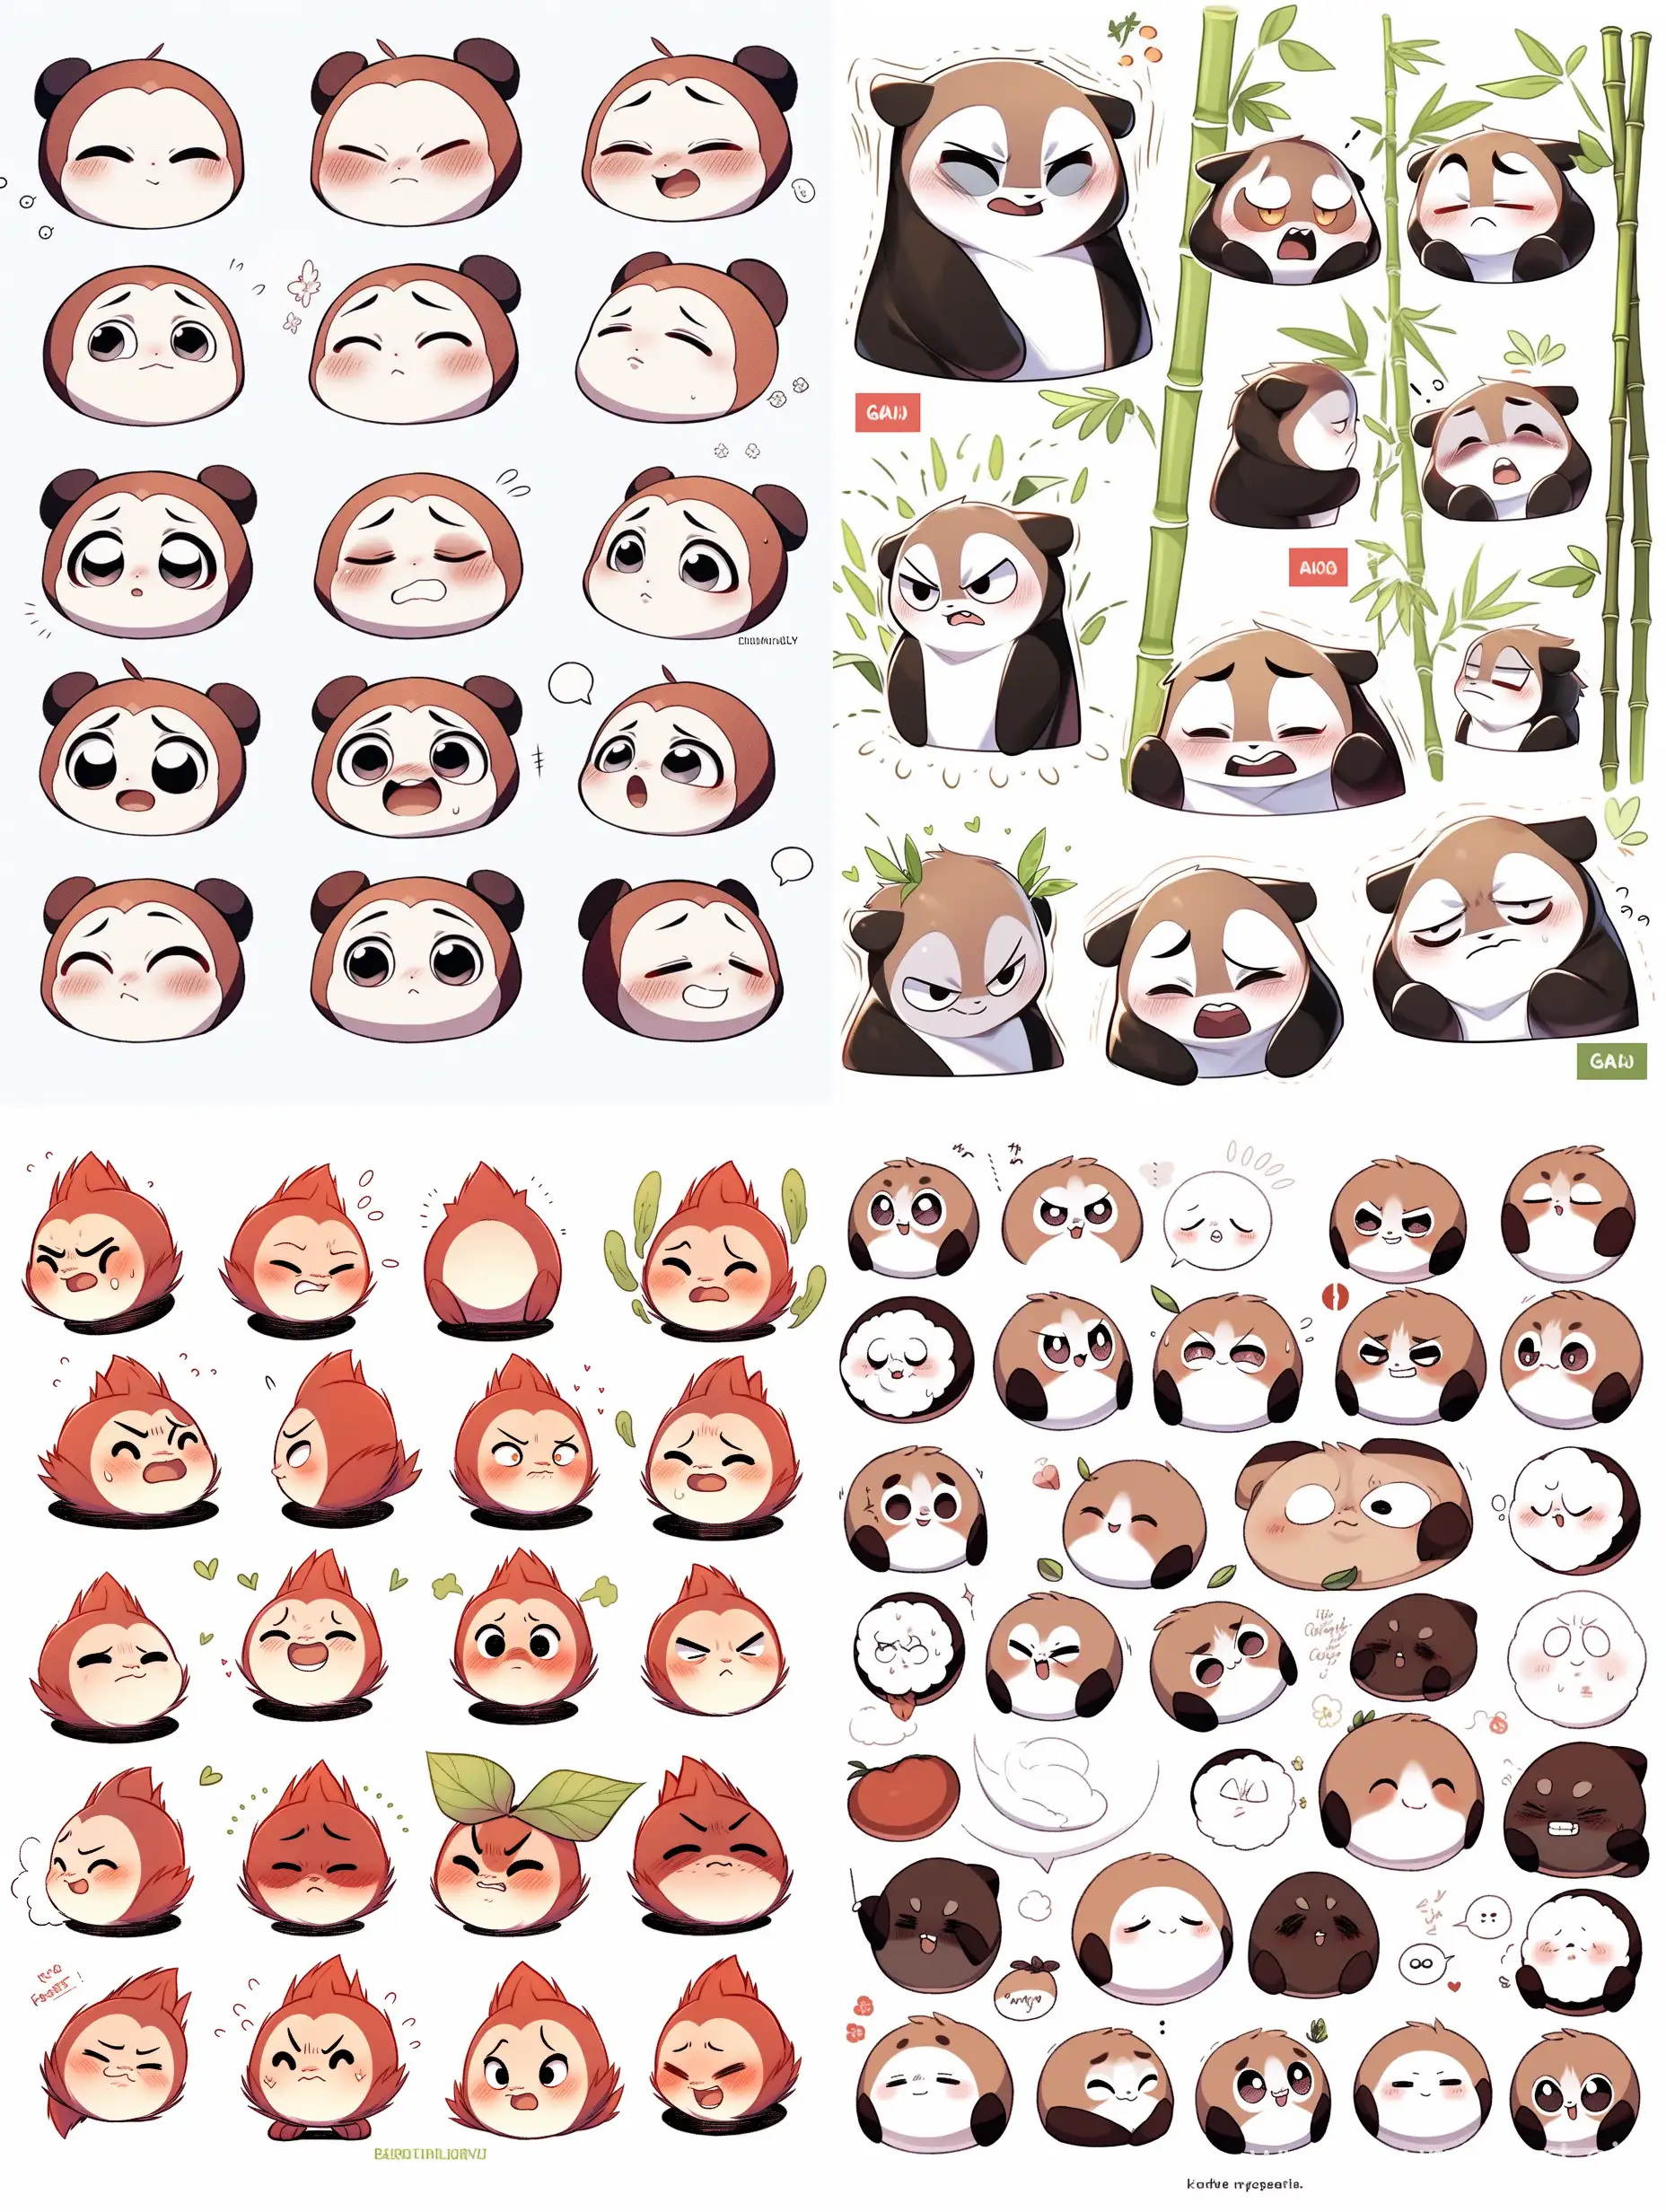 Expressive-Red-Panda-Playful-Emotions-in-DisneyStyle-Anthro-Art